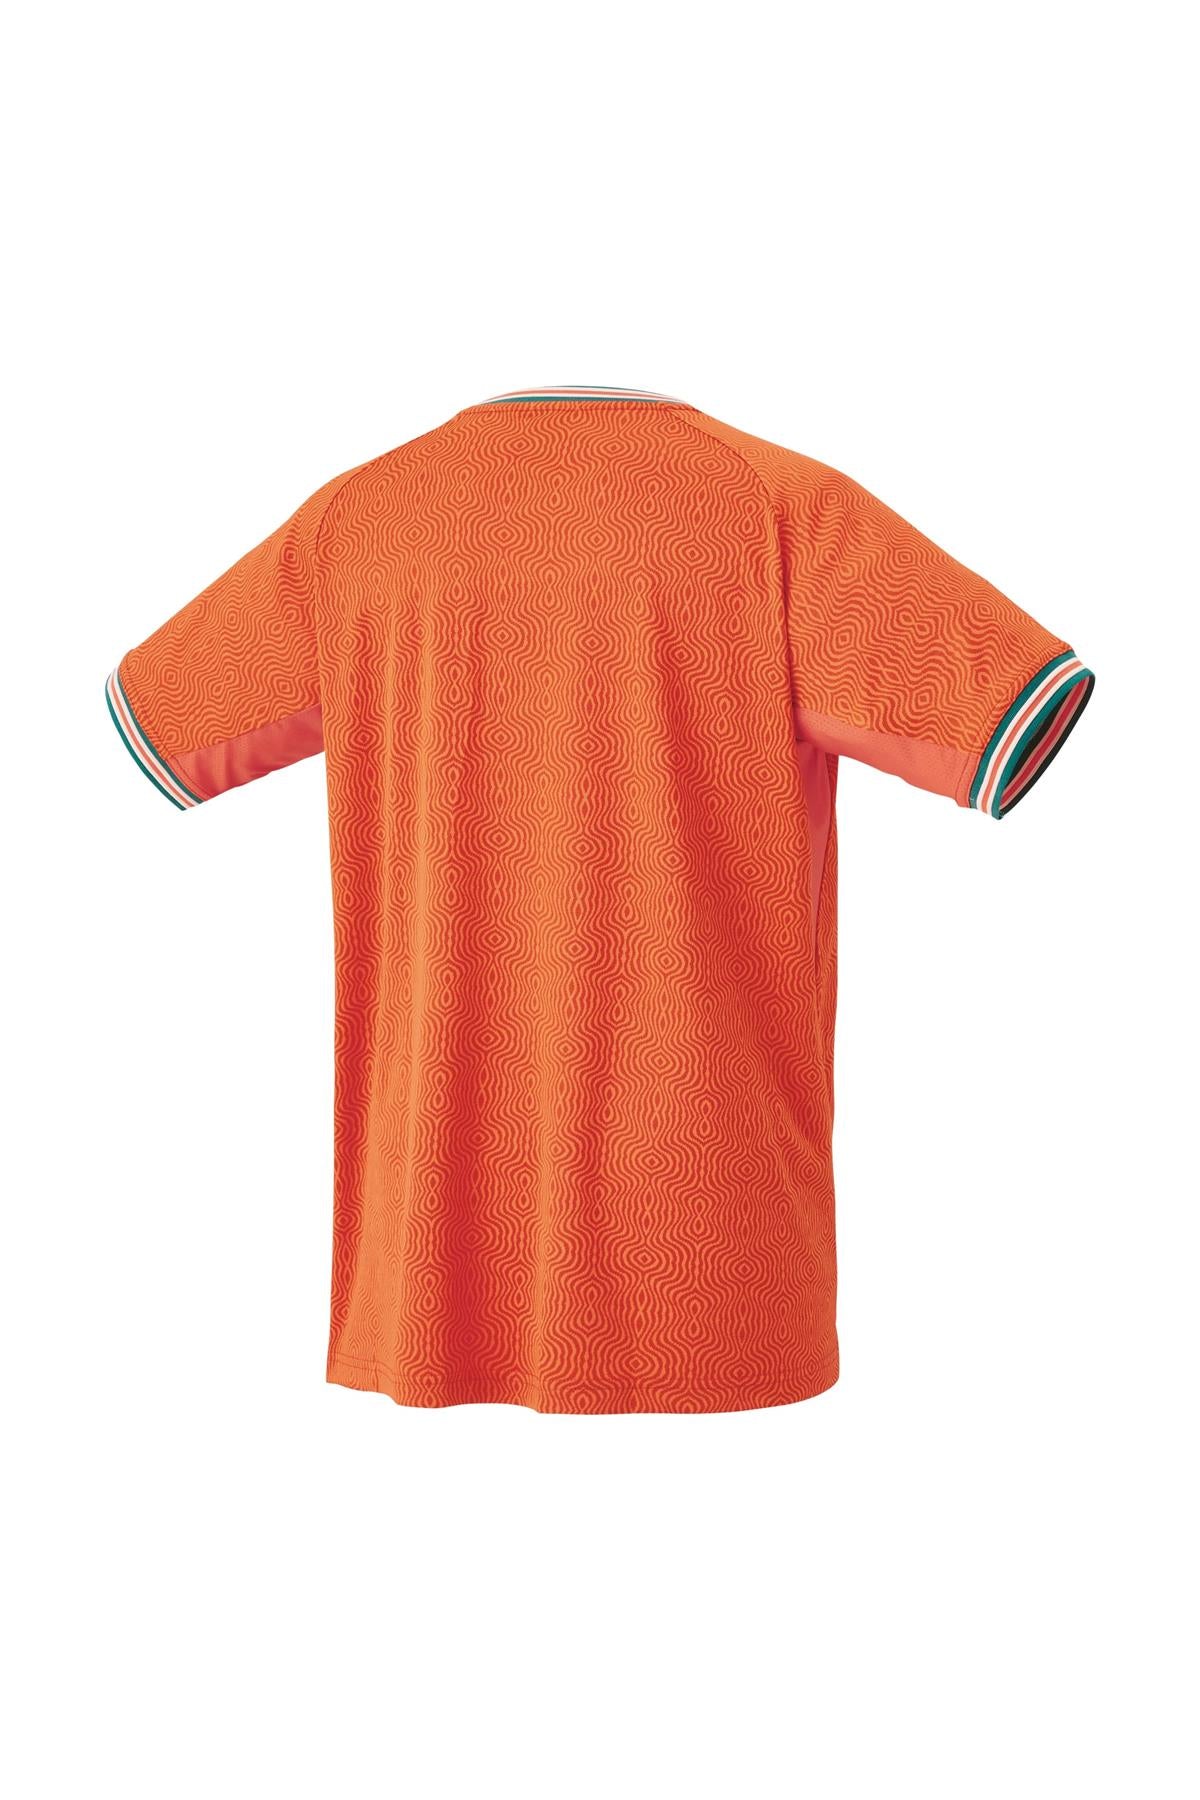 Yonex 10560 Mens Badminton T-Shirt - Bright Orange